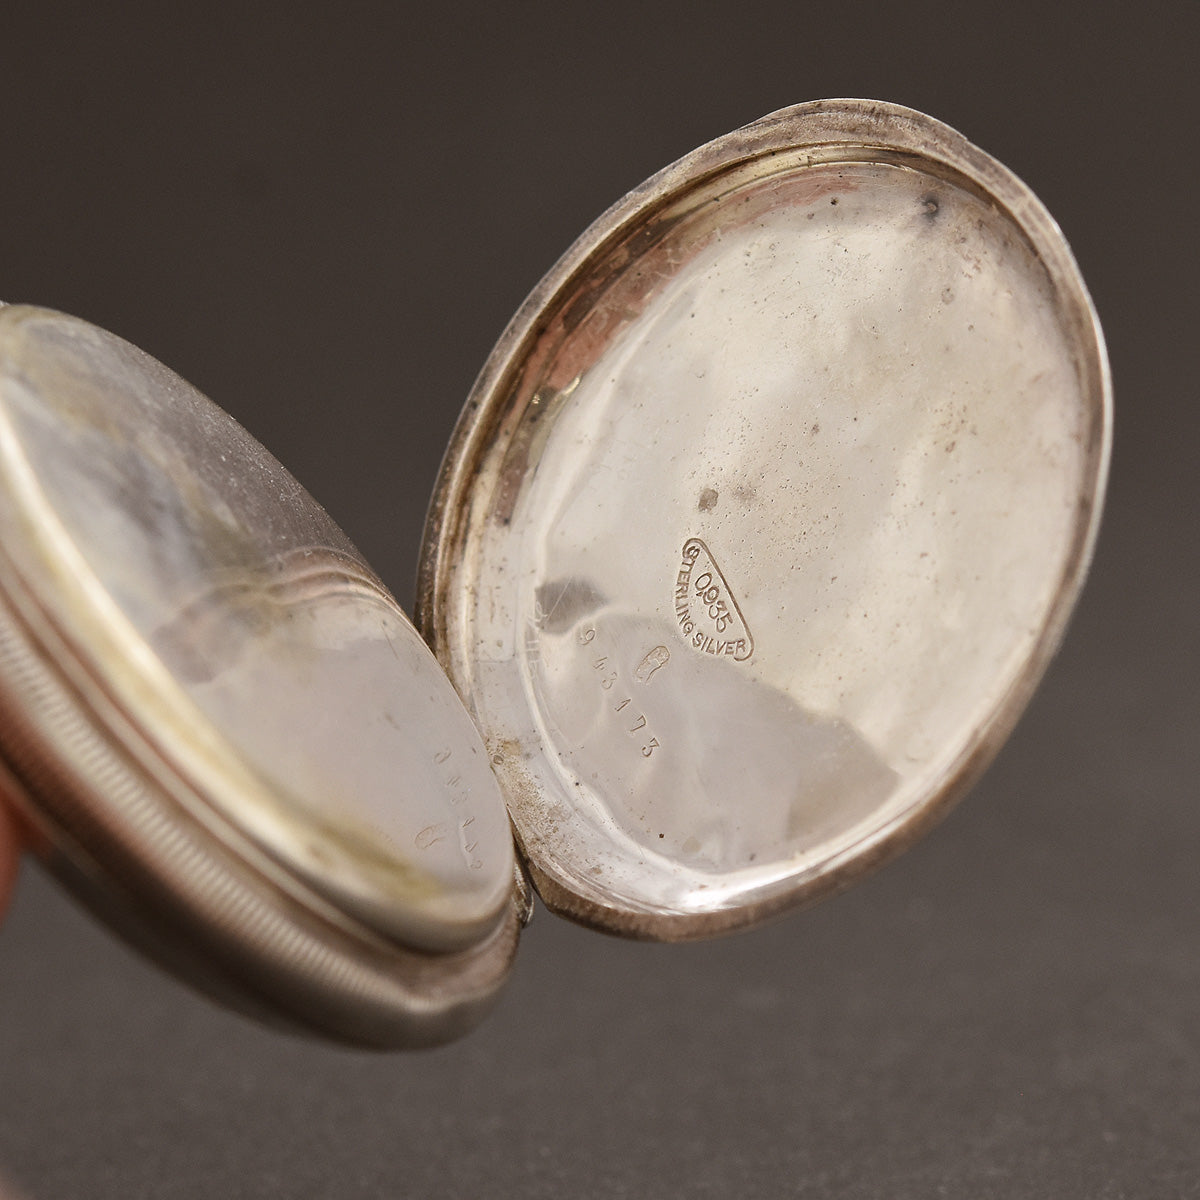 1898 LONGINES Swiss Antique Silver Pocket Watch